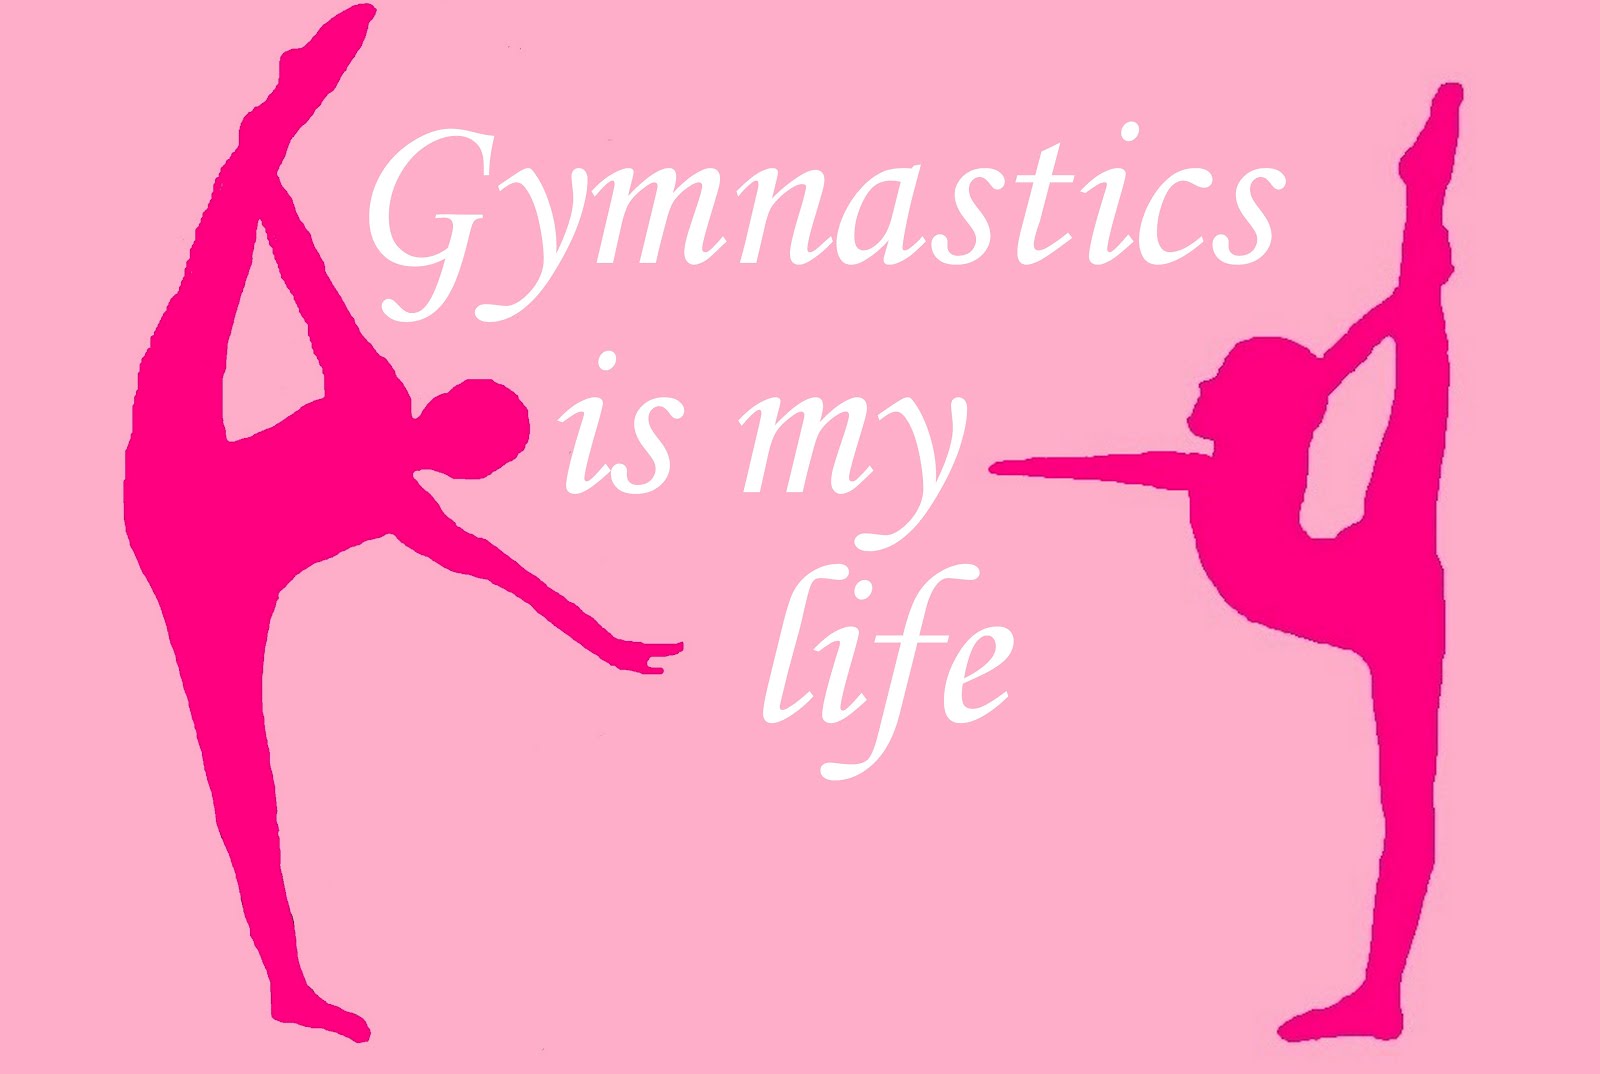 Gymnastics Is My Life